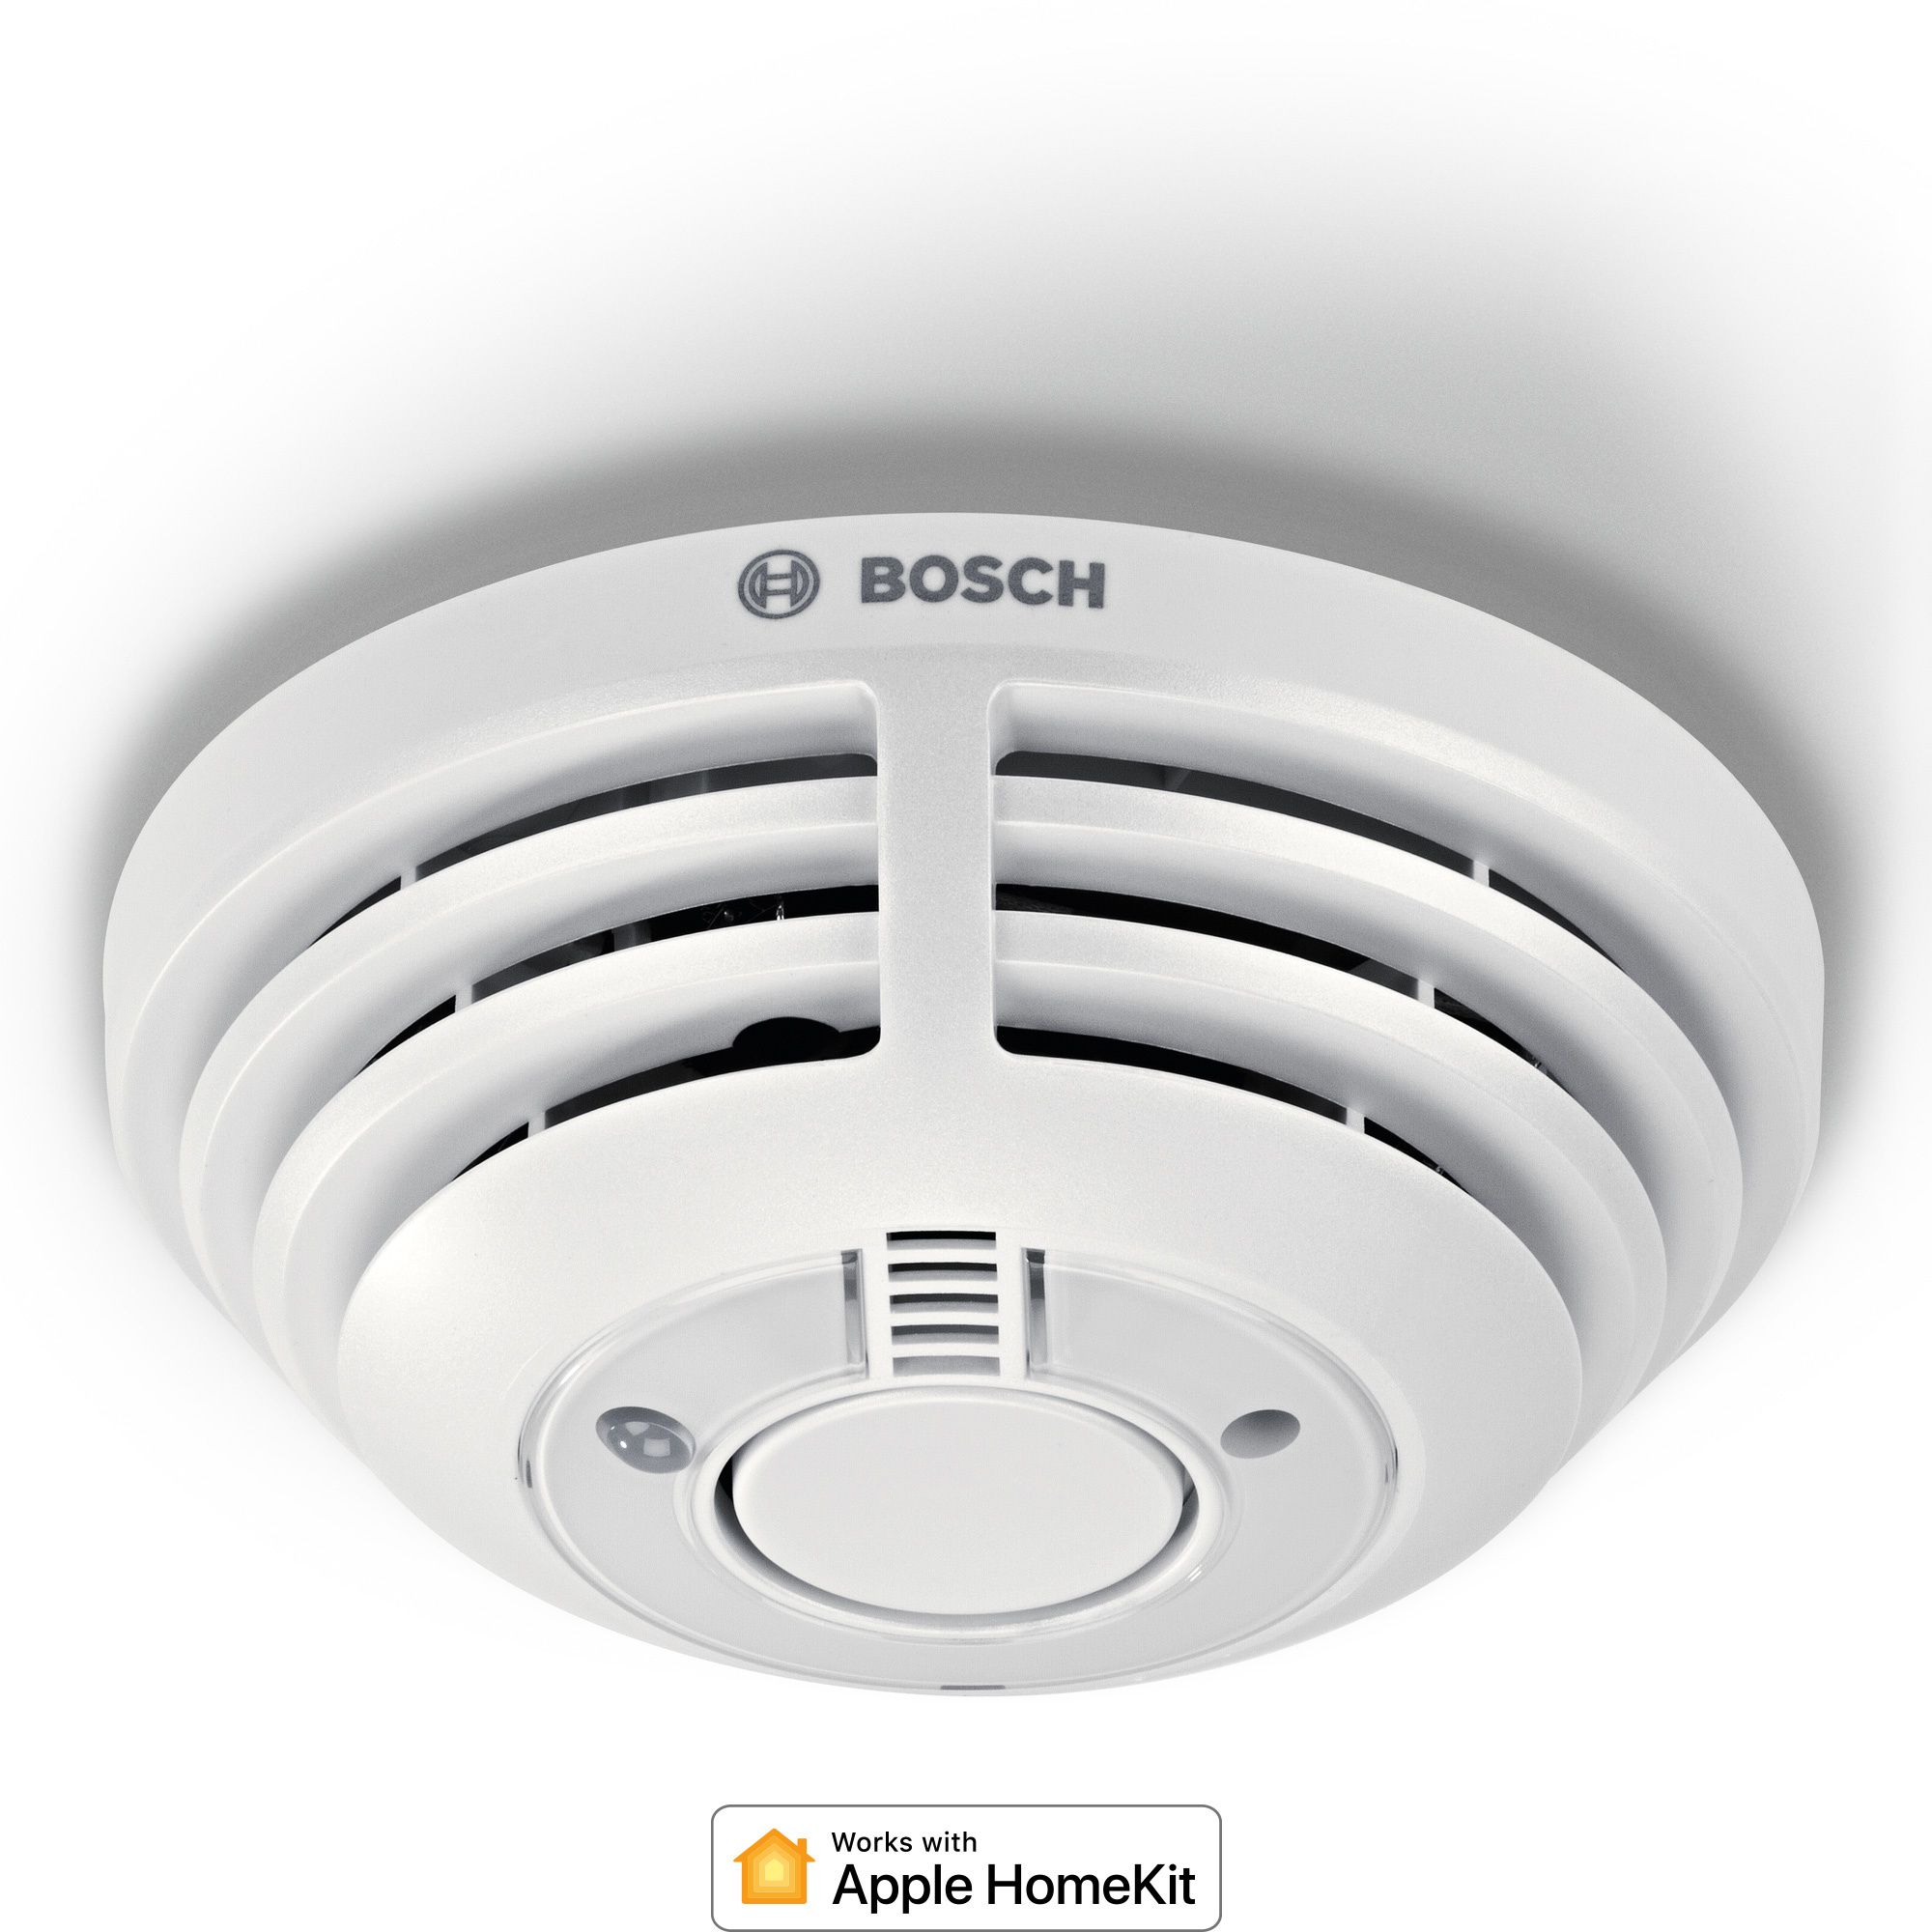 Bosch Smart Home Battery-powered smoke alarm